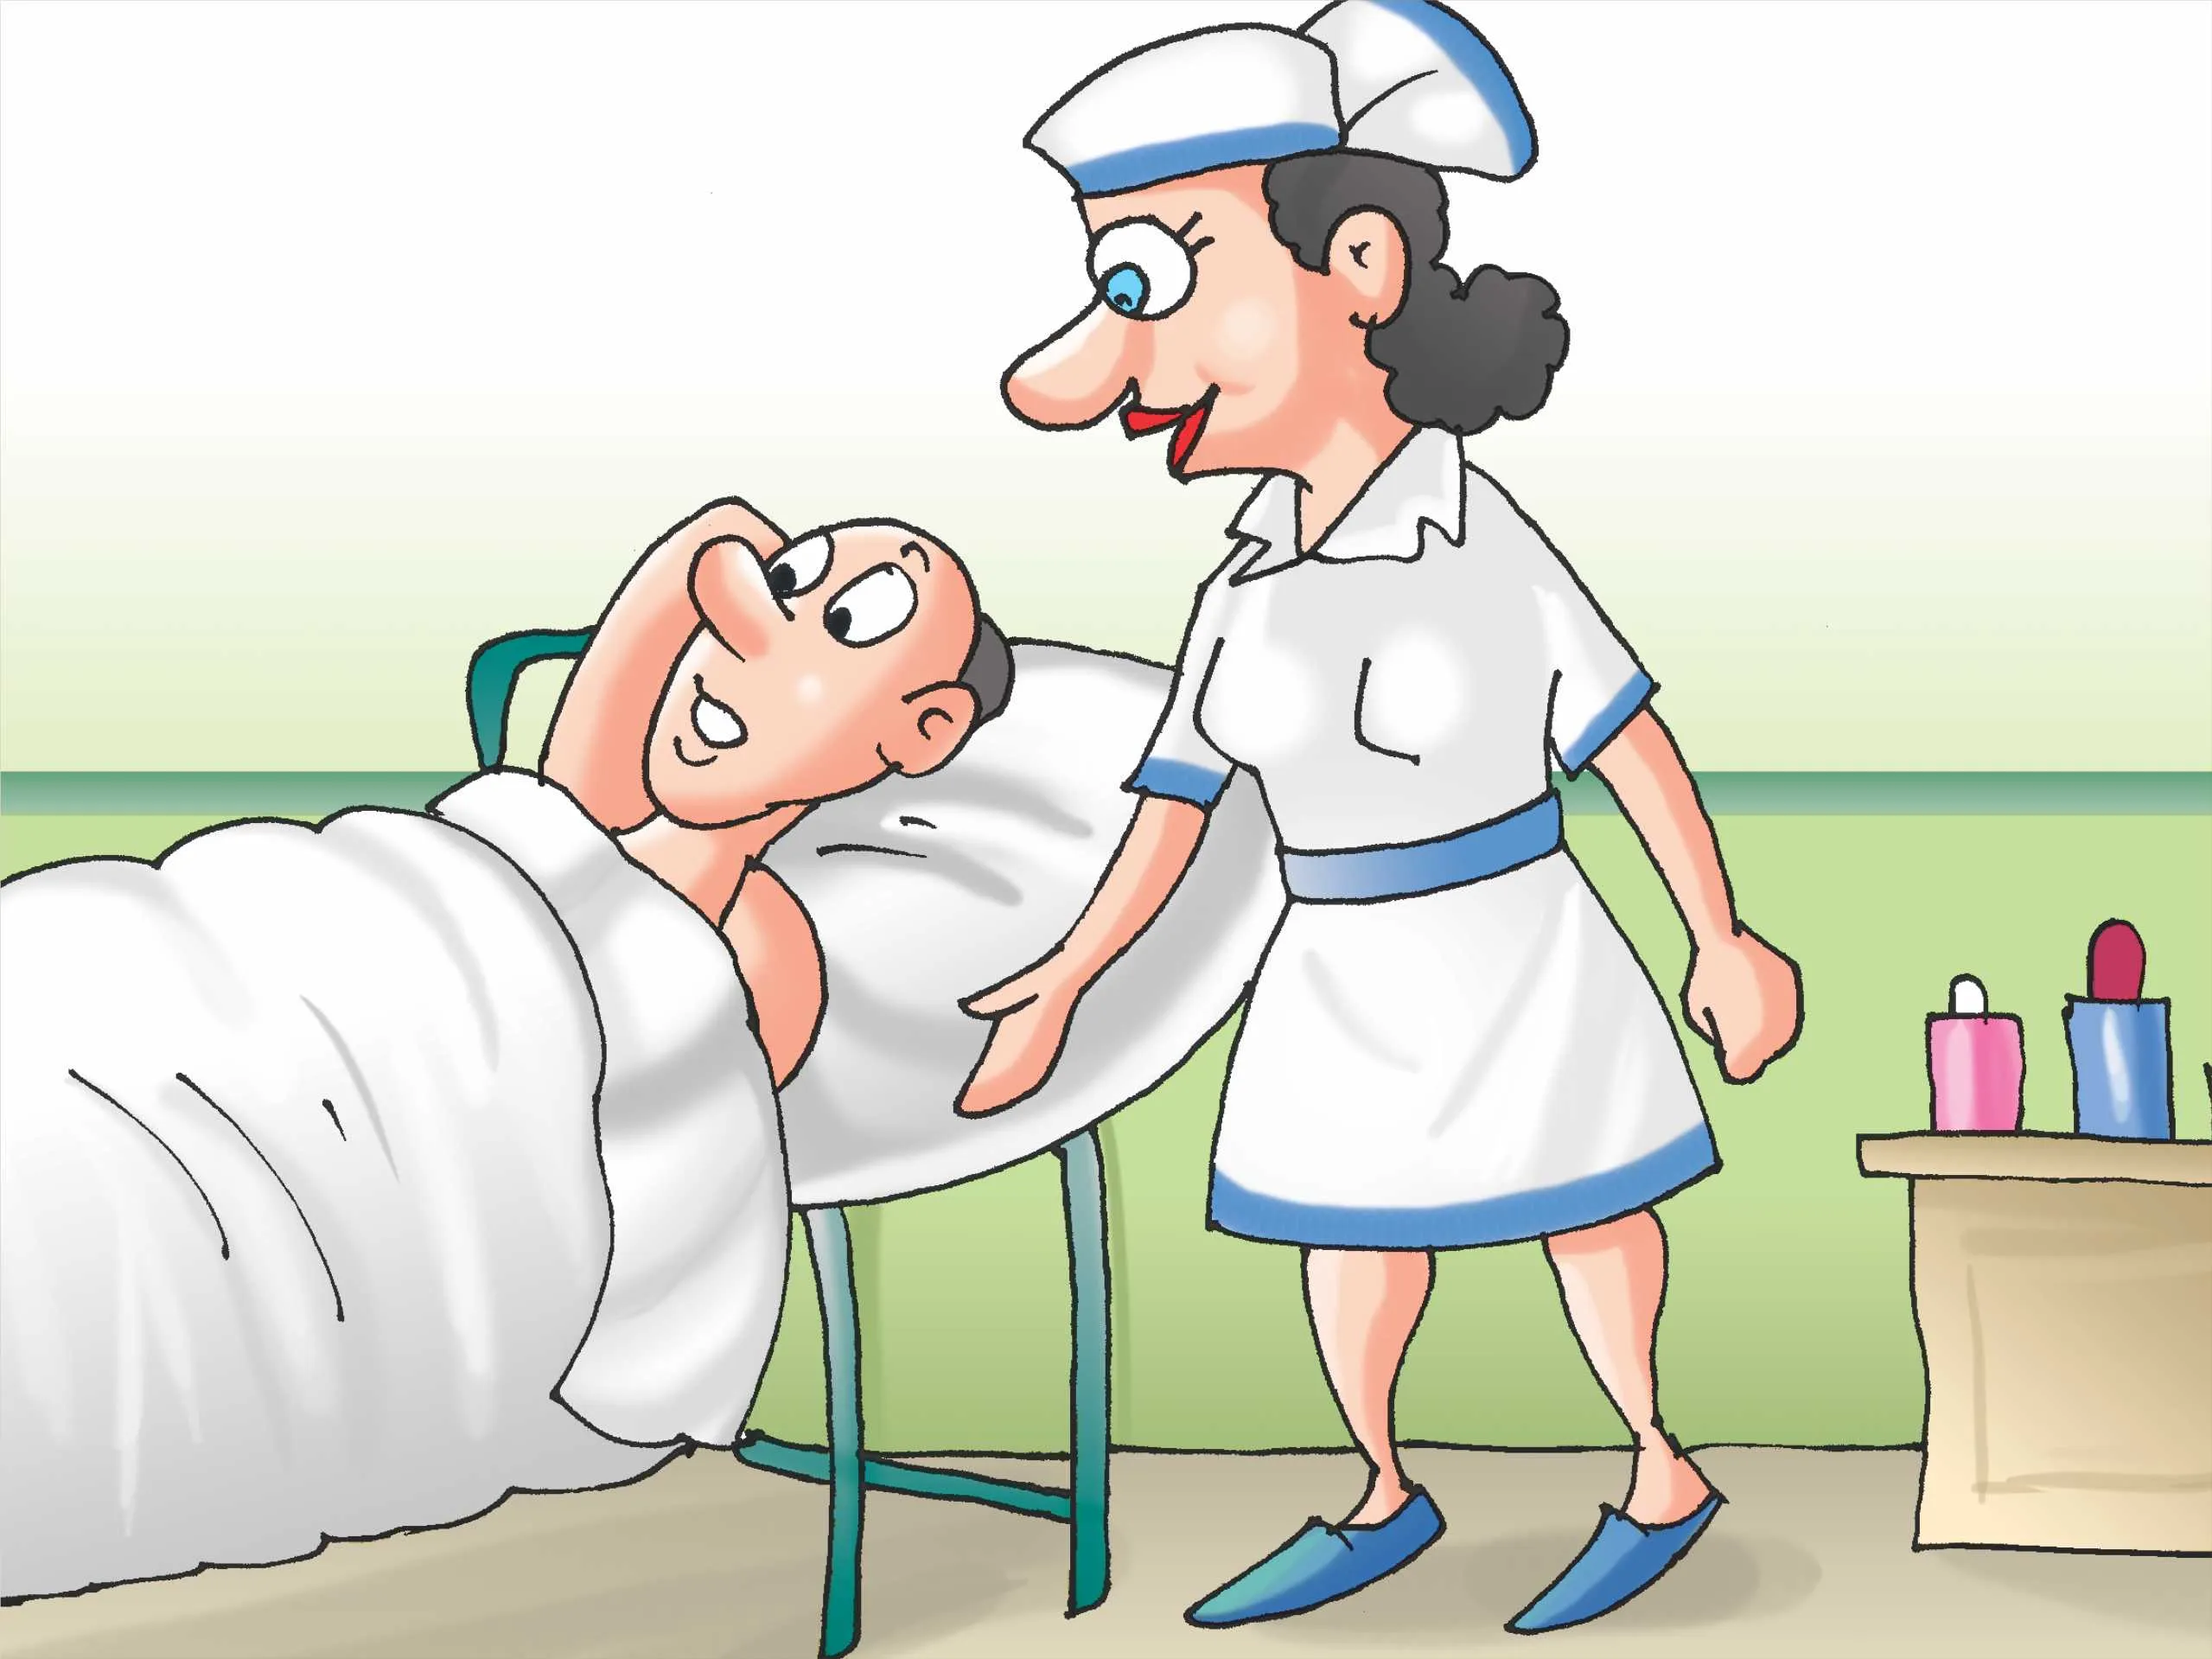 Nurse talking to pateint cartoon image